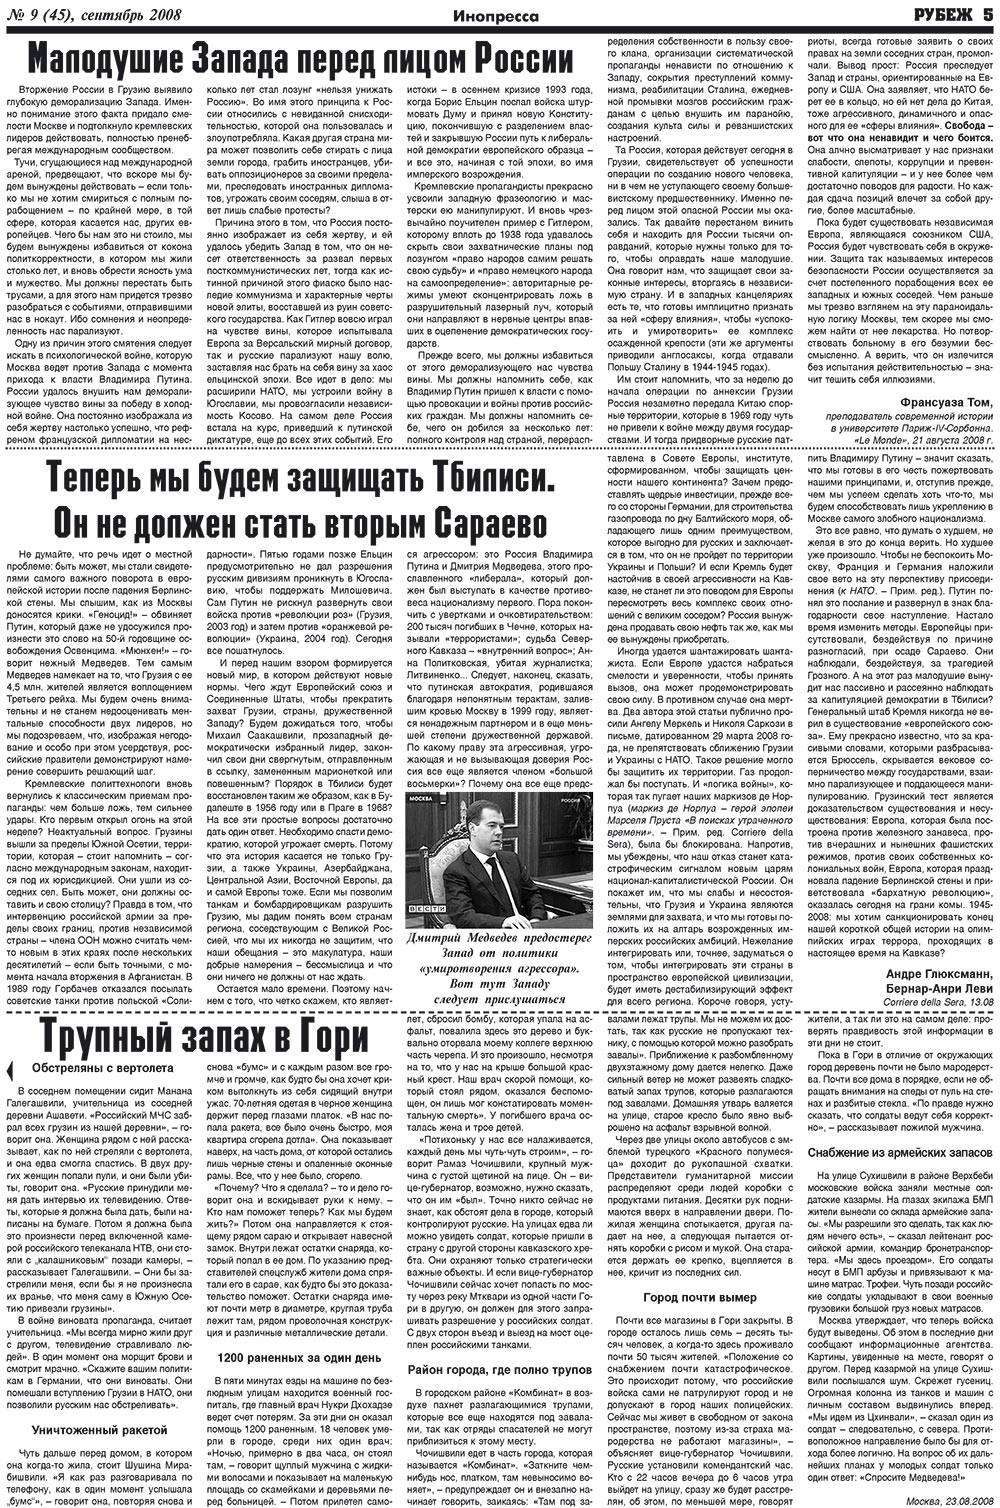 Рубеж, газета. 2008 №9 стр.5